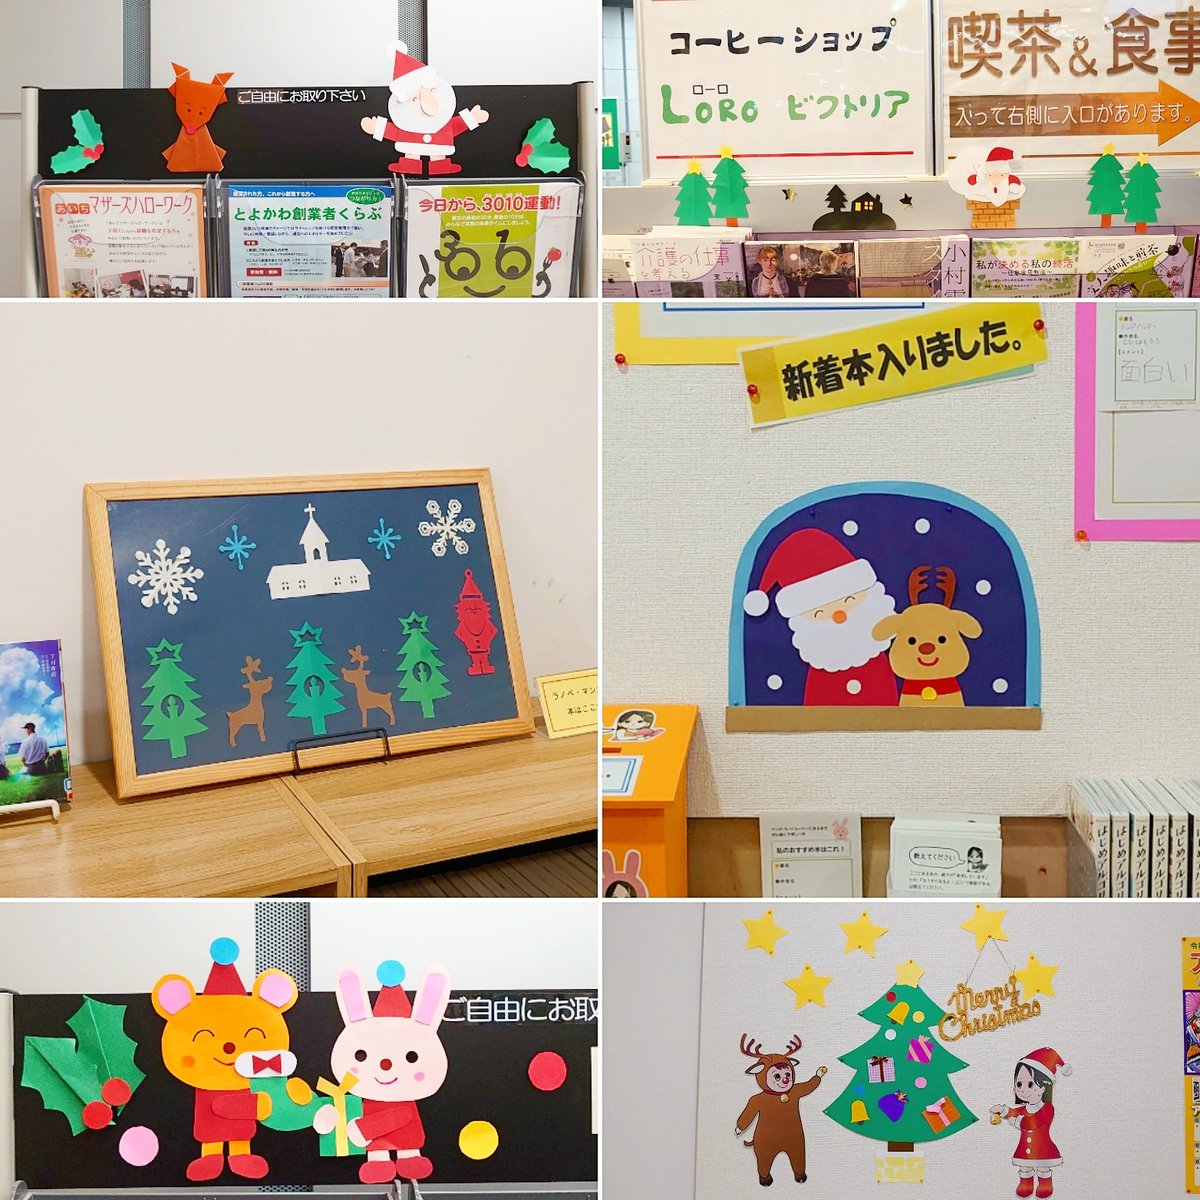 Toyokawa Libgeo 今日 １２月２４日はクリスマスイブ 豊川市中央図書館には 折り紙 や切り紙で作ったサンタクロースやクリスマスツリー トナカイなど クリスマスをイメージしたデザインで飾り付けしてあります T Co 1f3u6rhc8u 豊川市 図書館